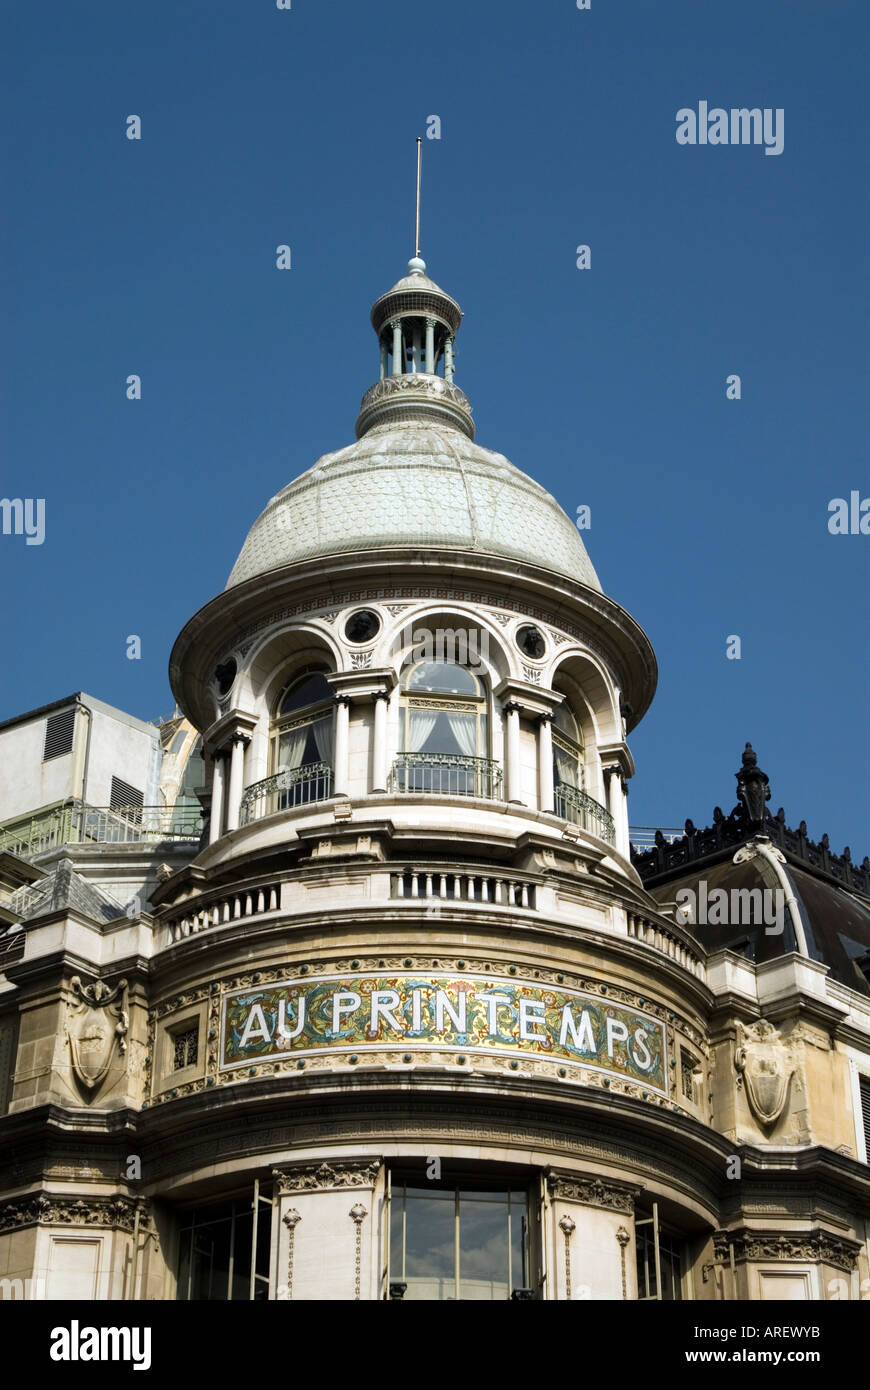 Au Printemps Kaufhaus am Boulevard Haussmann Paris Frankreich Stockfoto